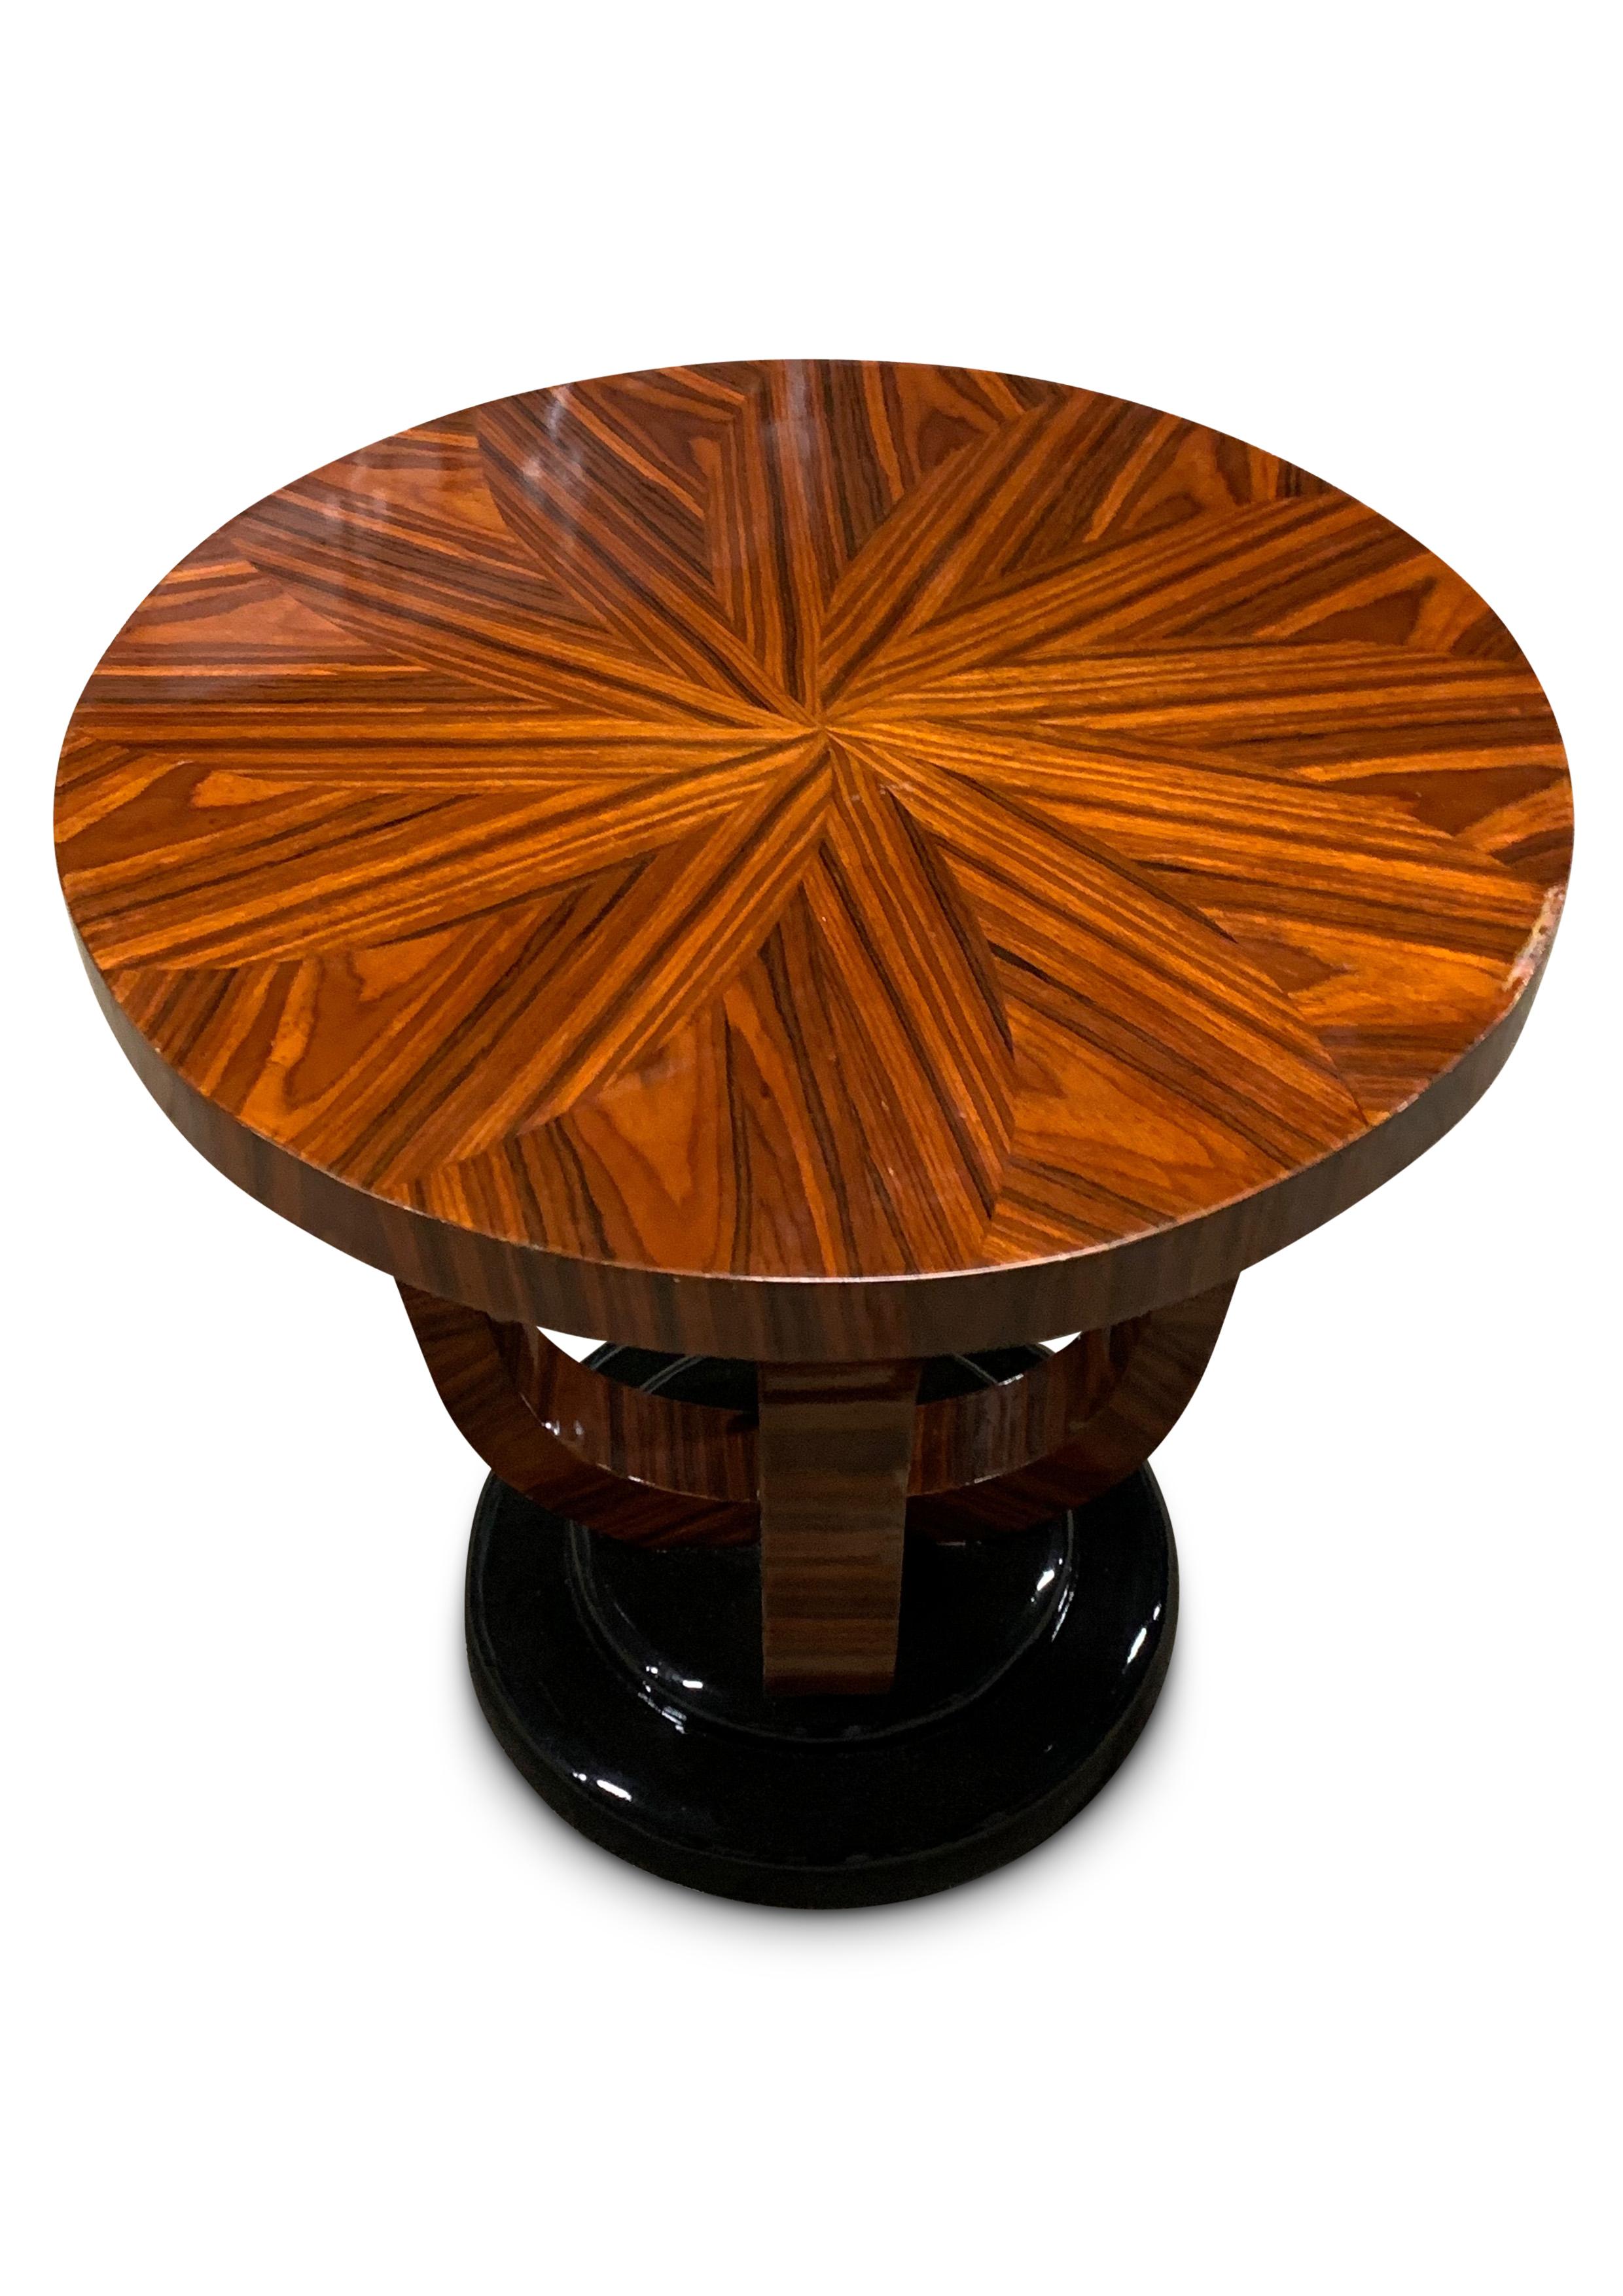 20th Century Jules Leleu Style Art Deco Pedestal Table With A Beautiful Rosewood Sunburst Top For Sale